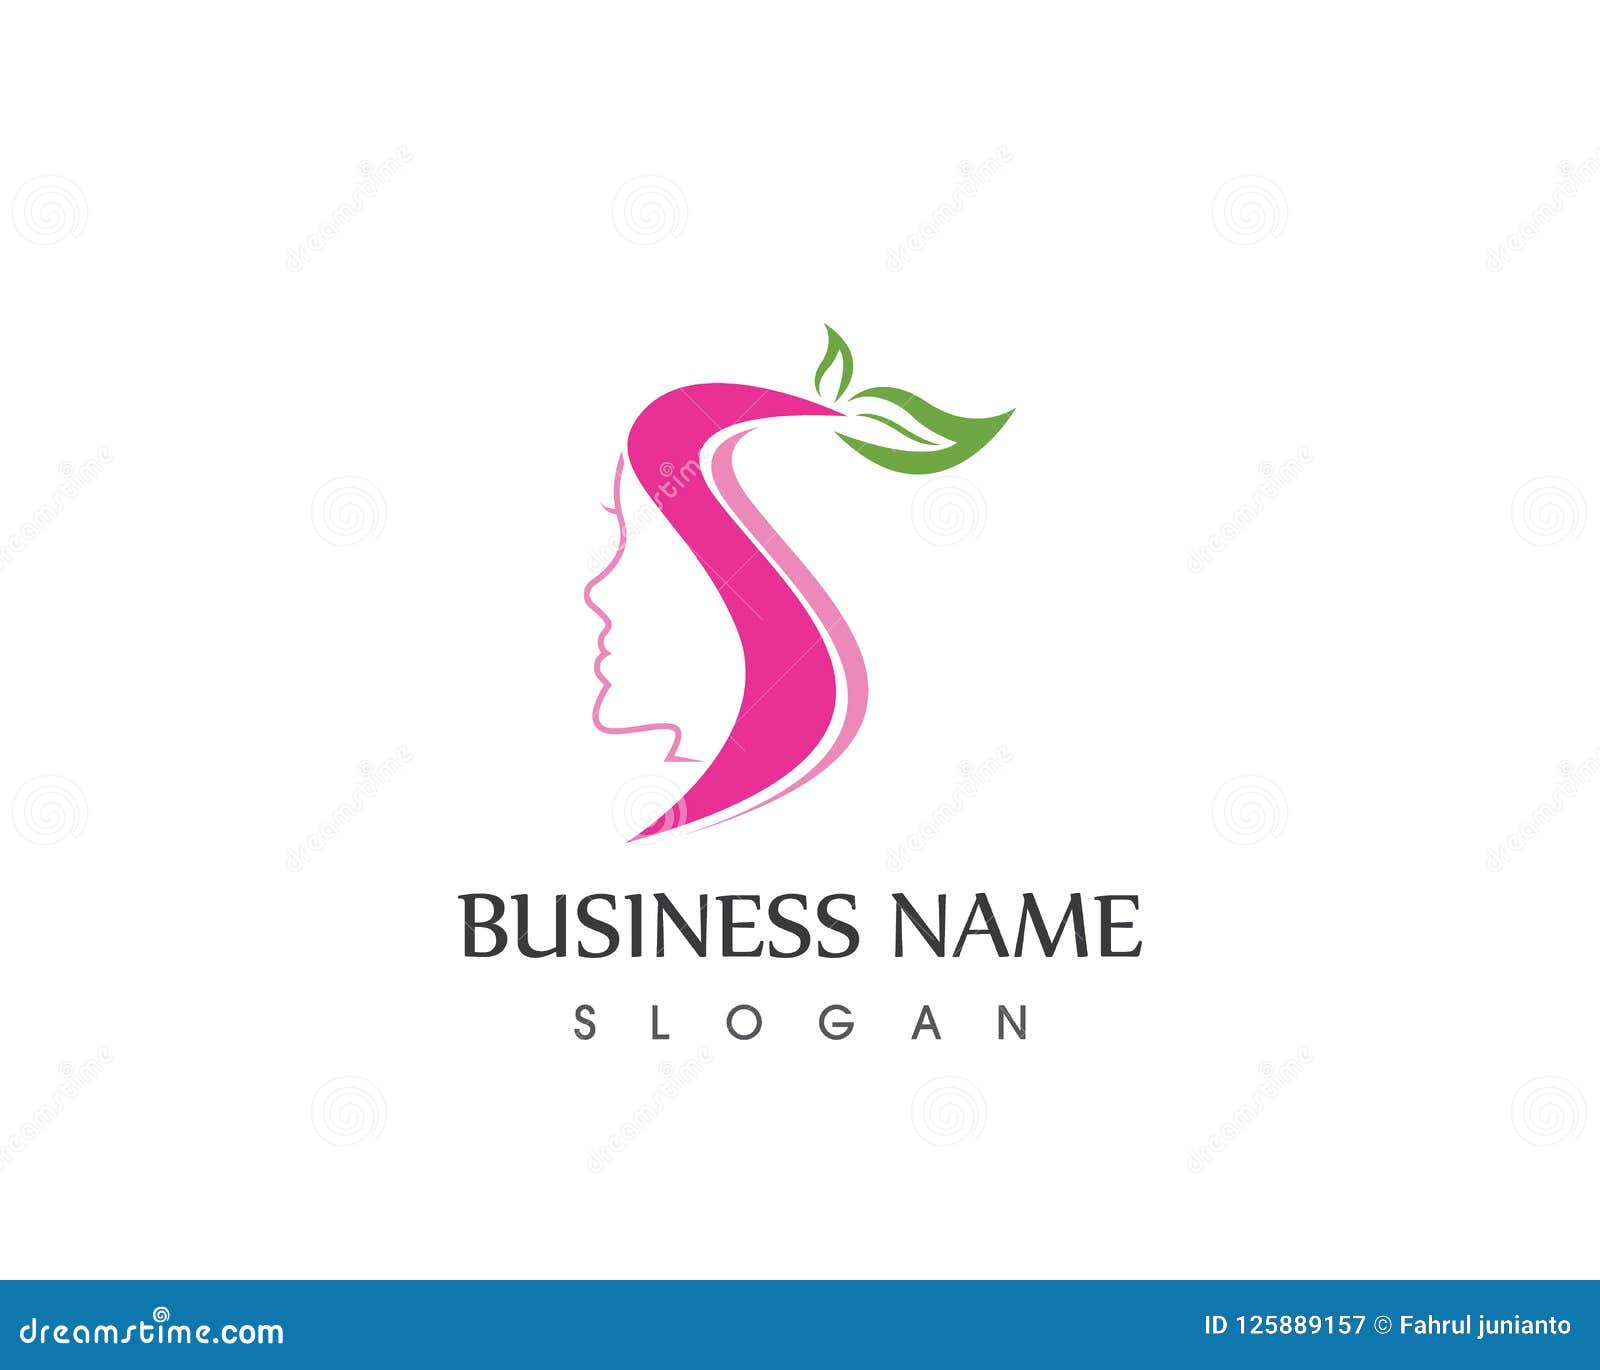 Salon logos